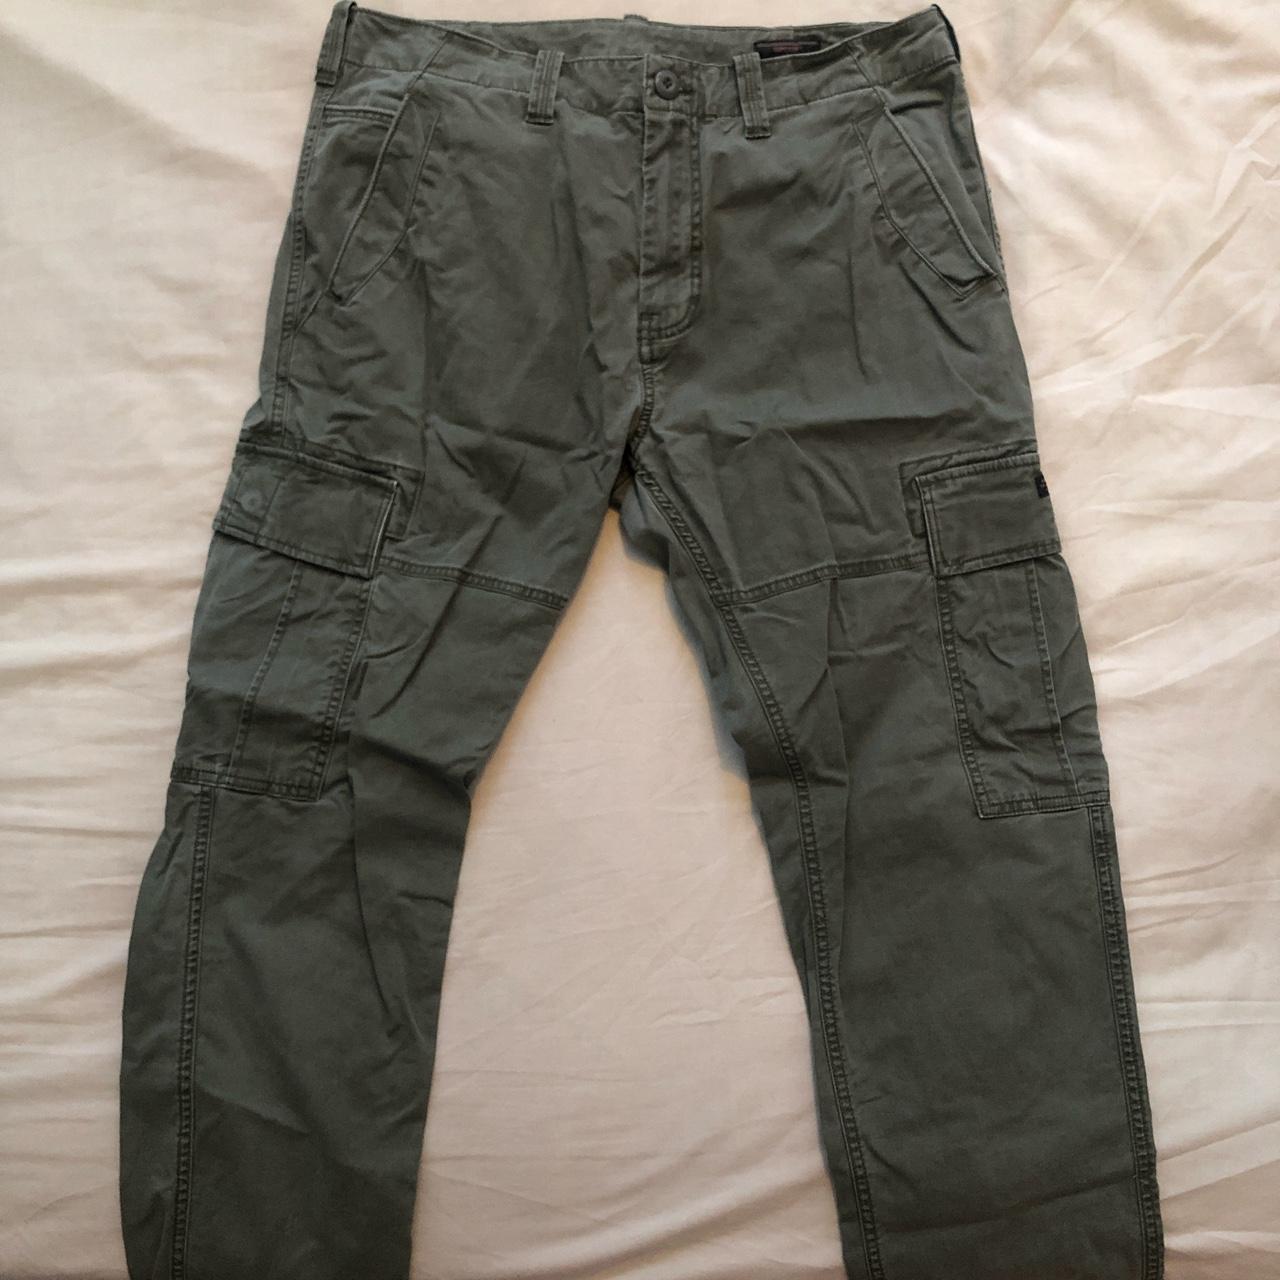 Green superdry cargo pants - Depop